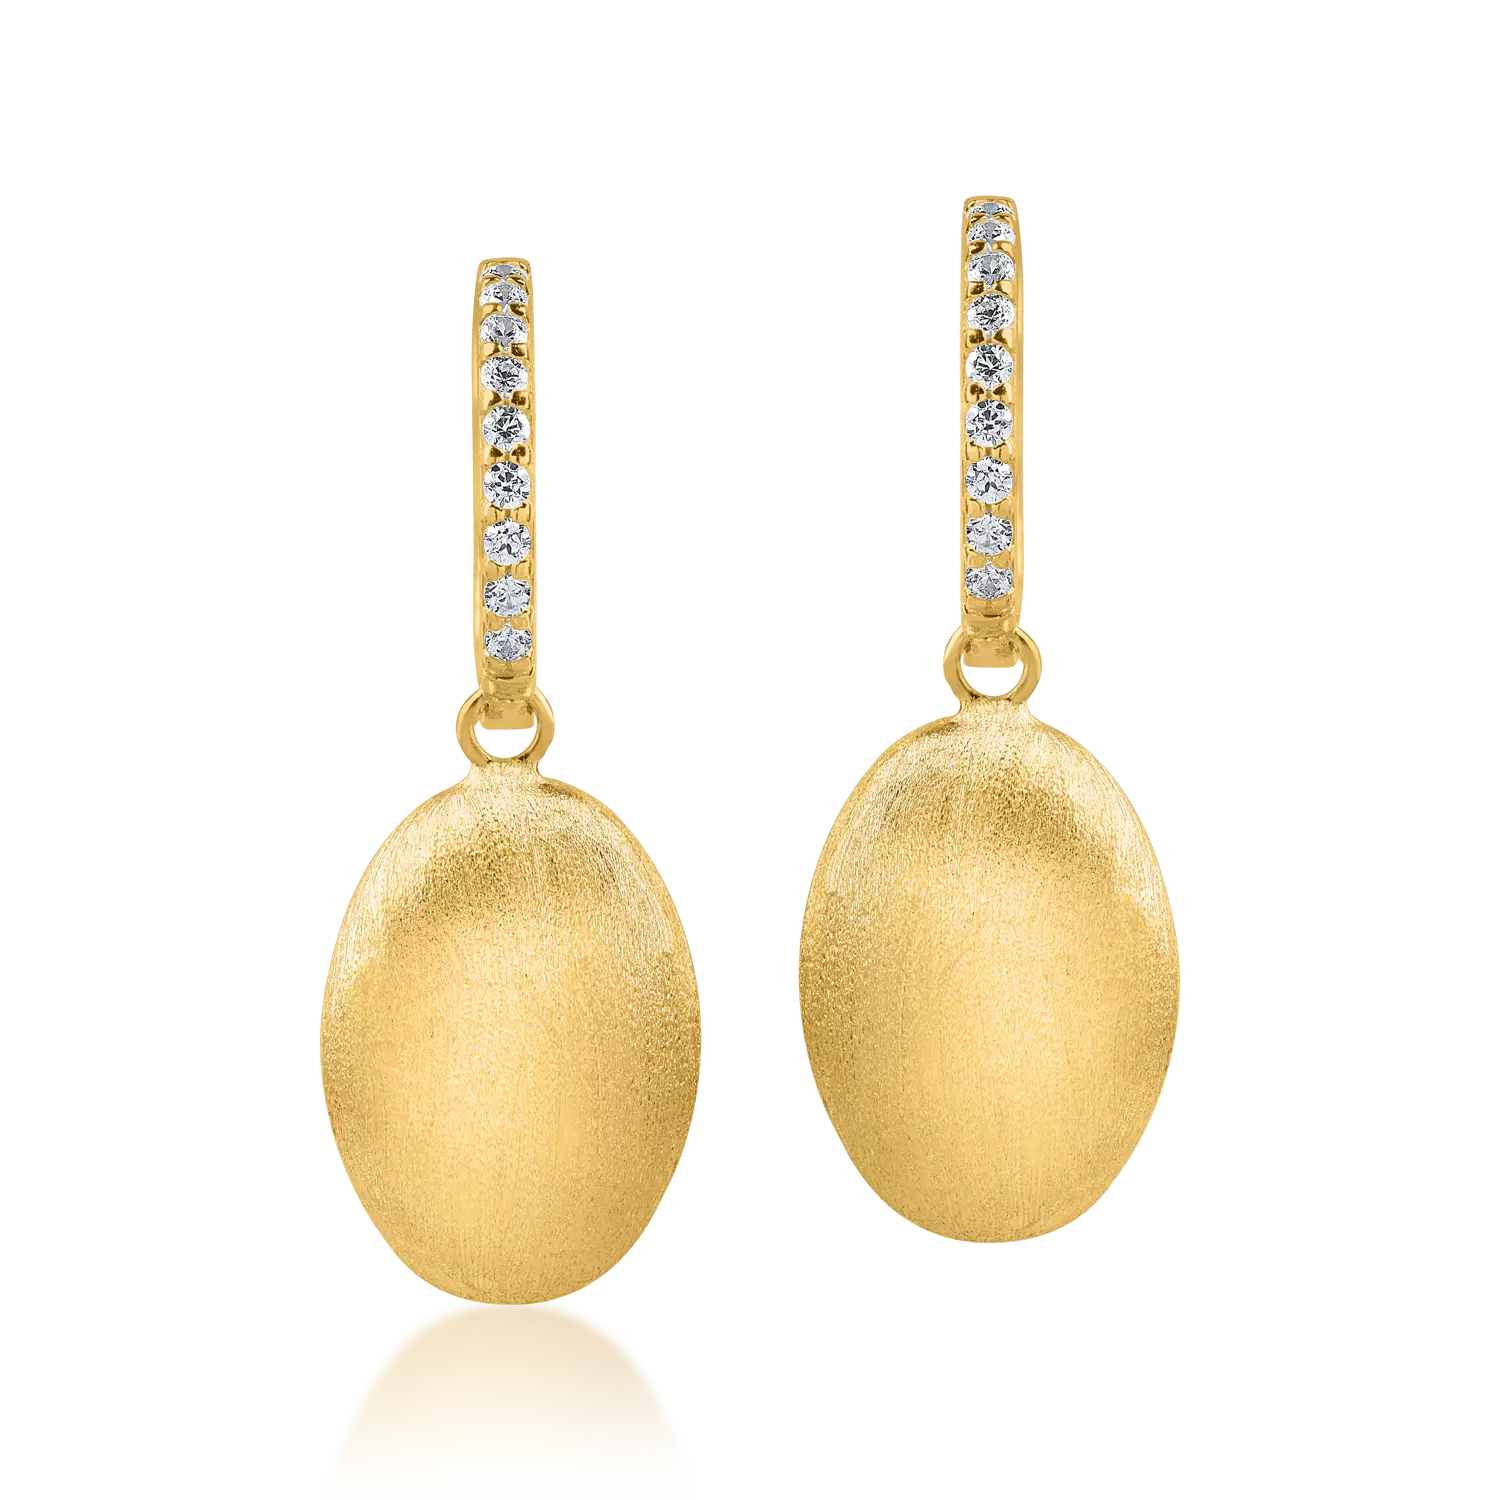 Yellow gold geometric earrings with zirconia